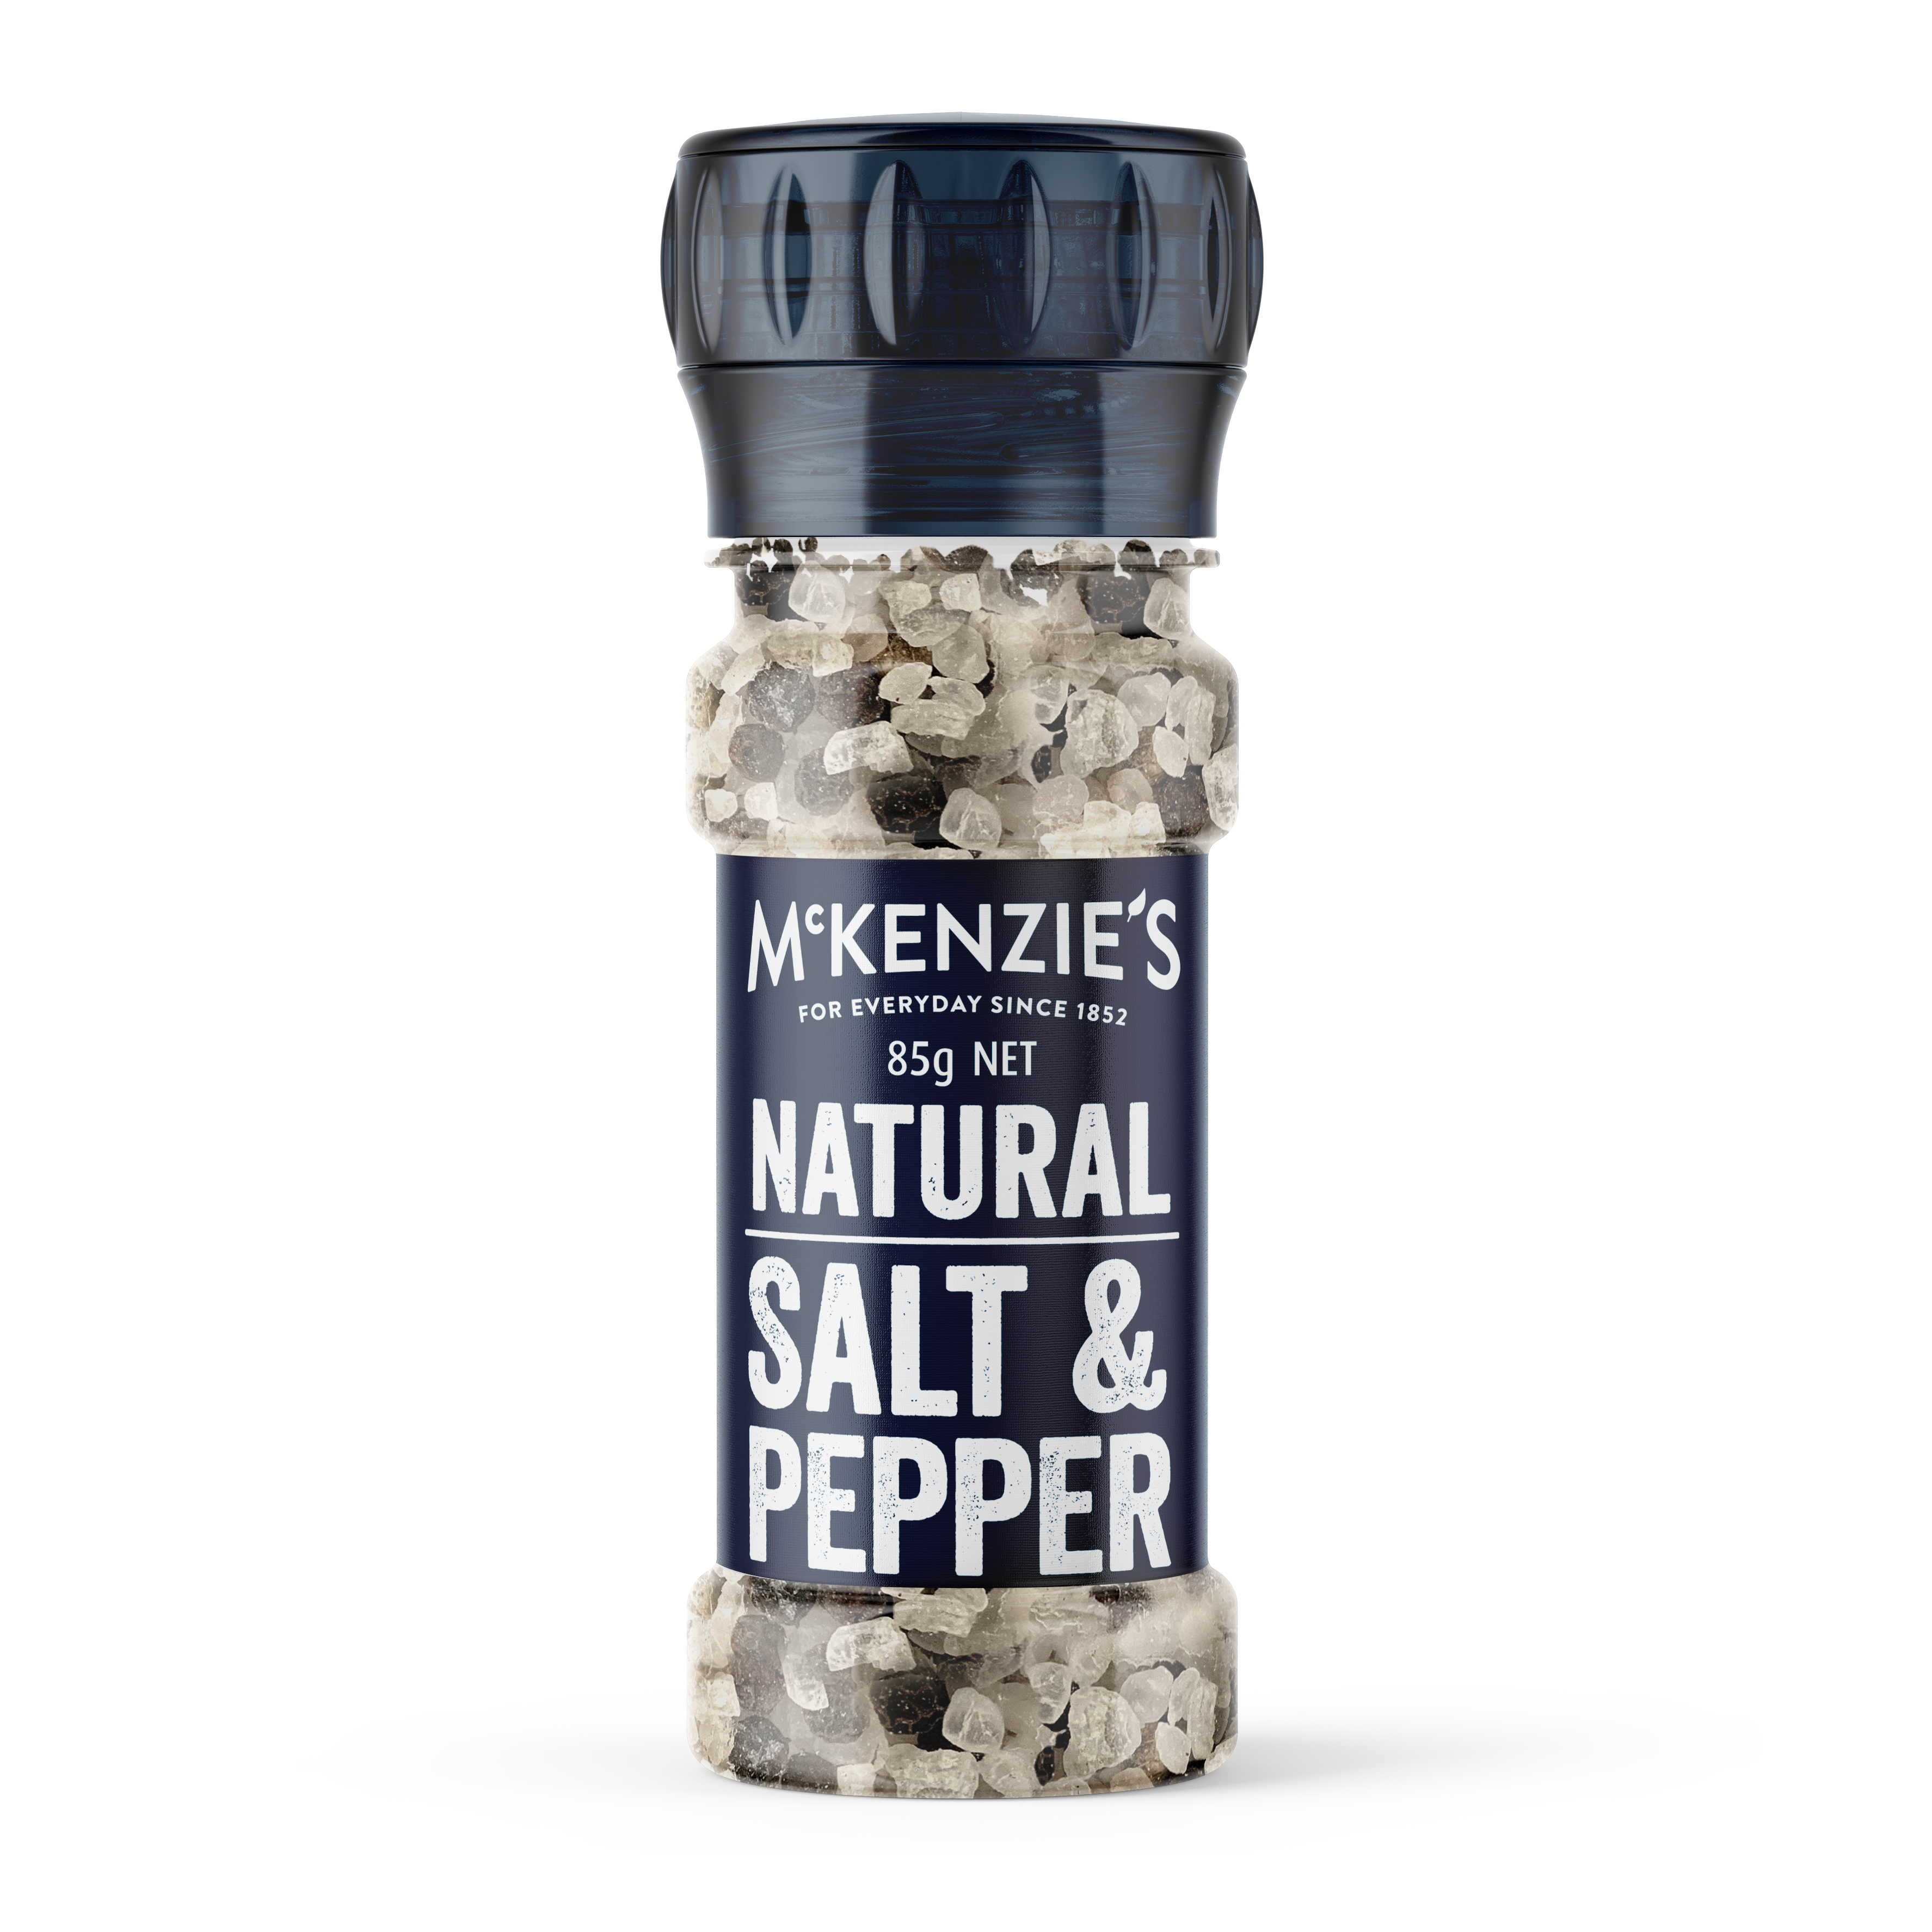 Download Exclusive Mockups for Branding and Packaging Design - McKenzie's Foods